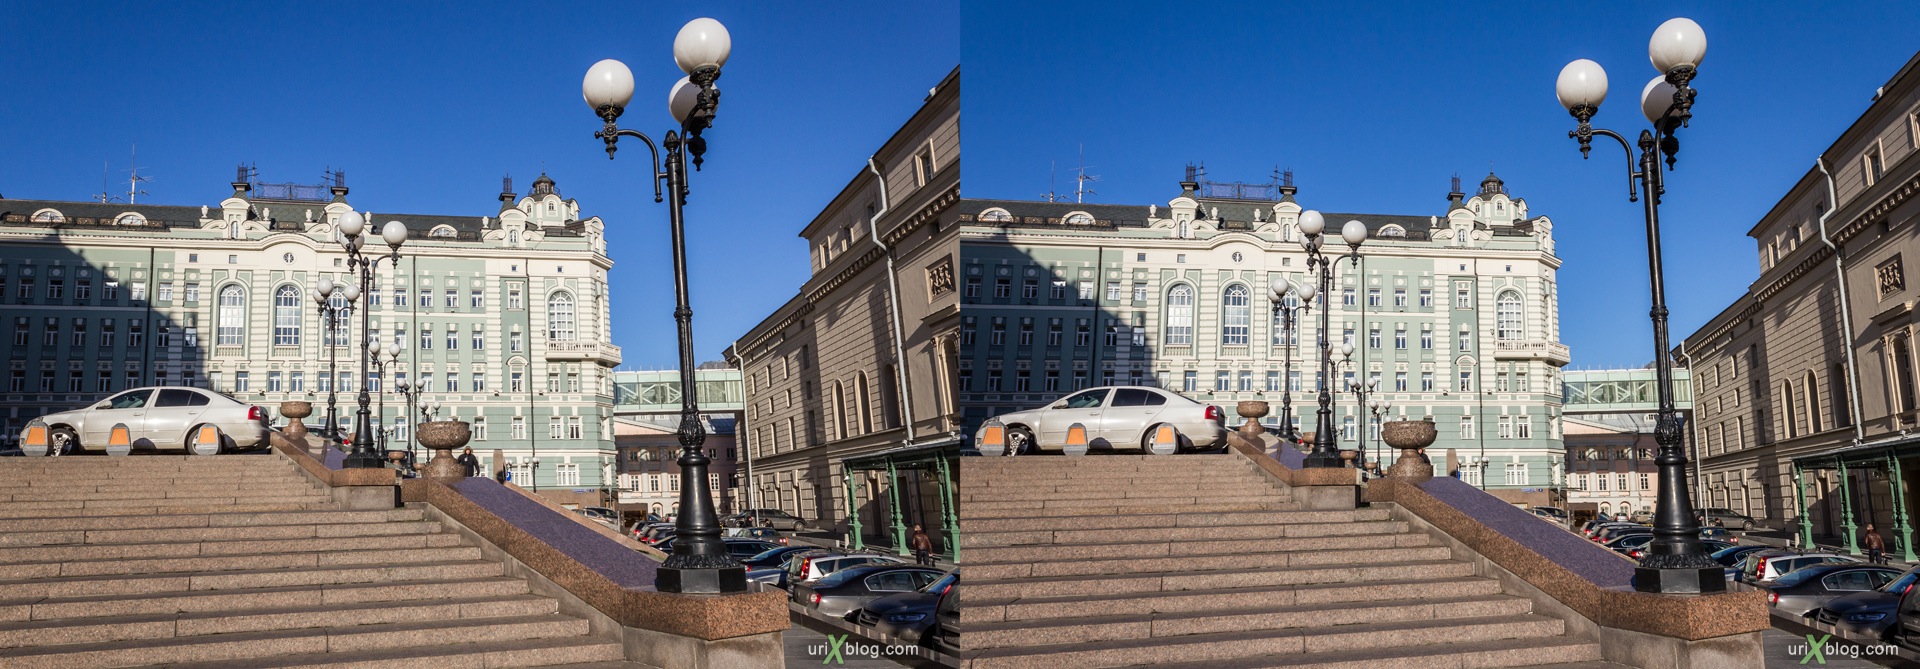 2013, Moscow, Russia, Teatralnaya square, Theatre square, Bolshow theatre, Grand theatre, 3D, stereo pair, cross-eyed, crossview, cross view stereo pair, stereoscopic